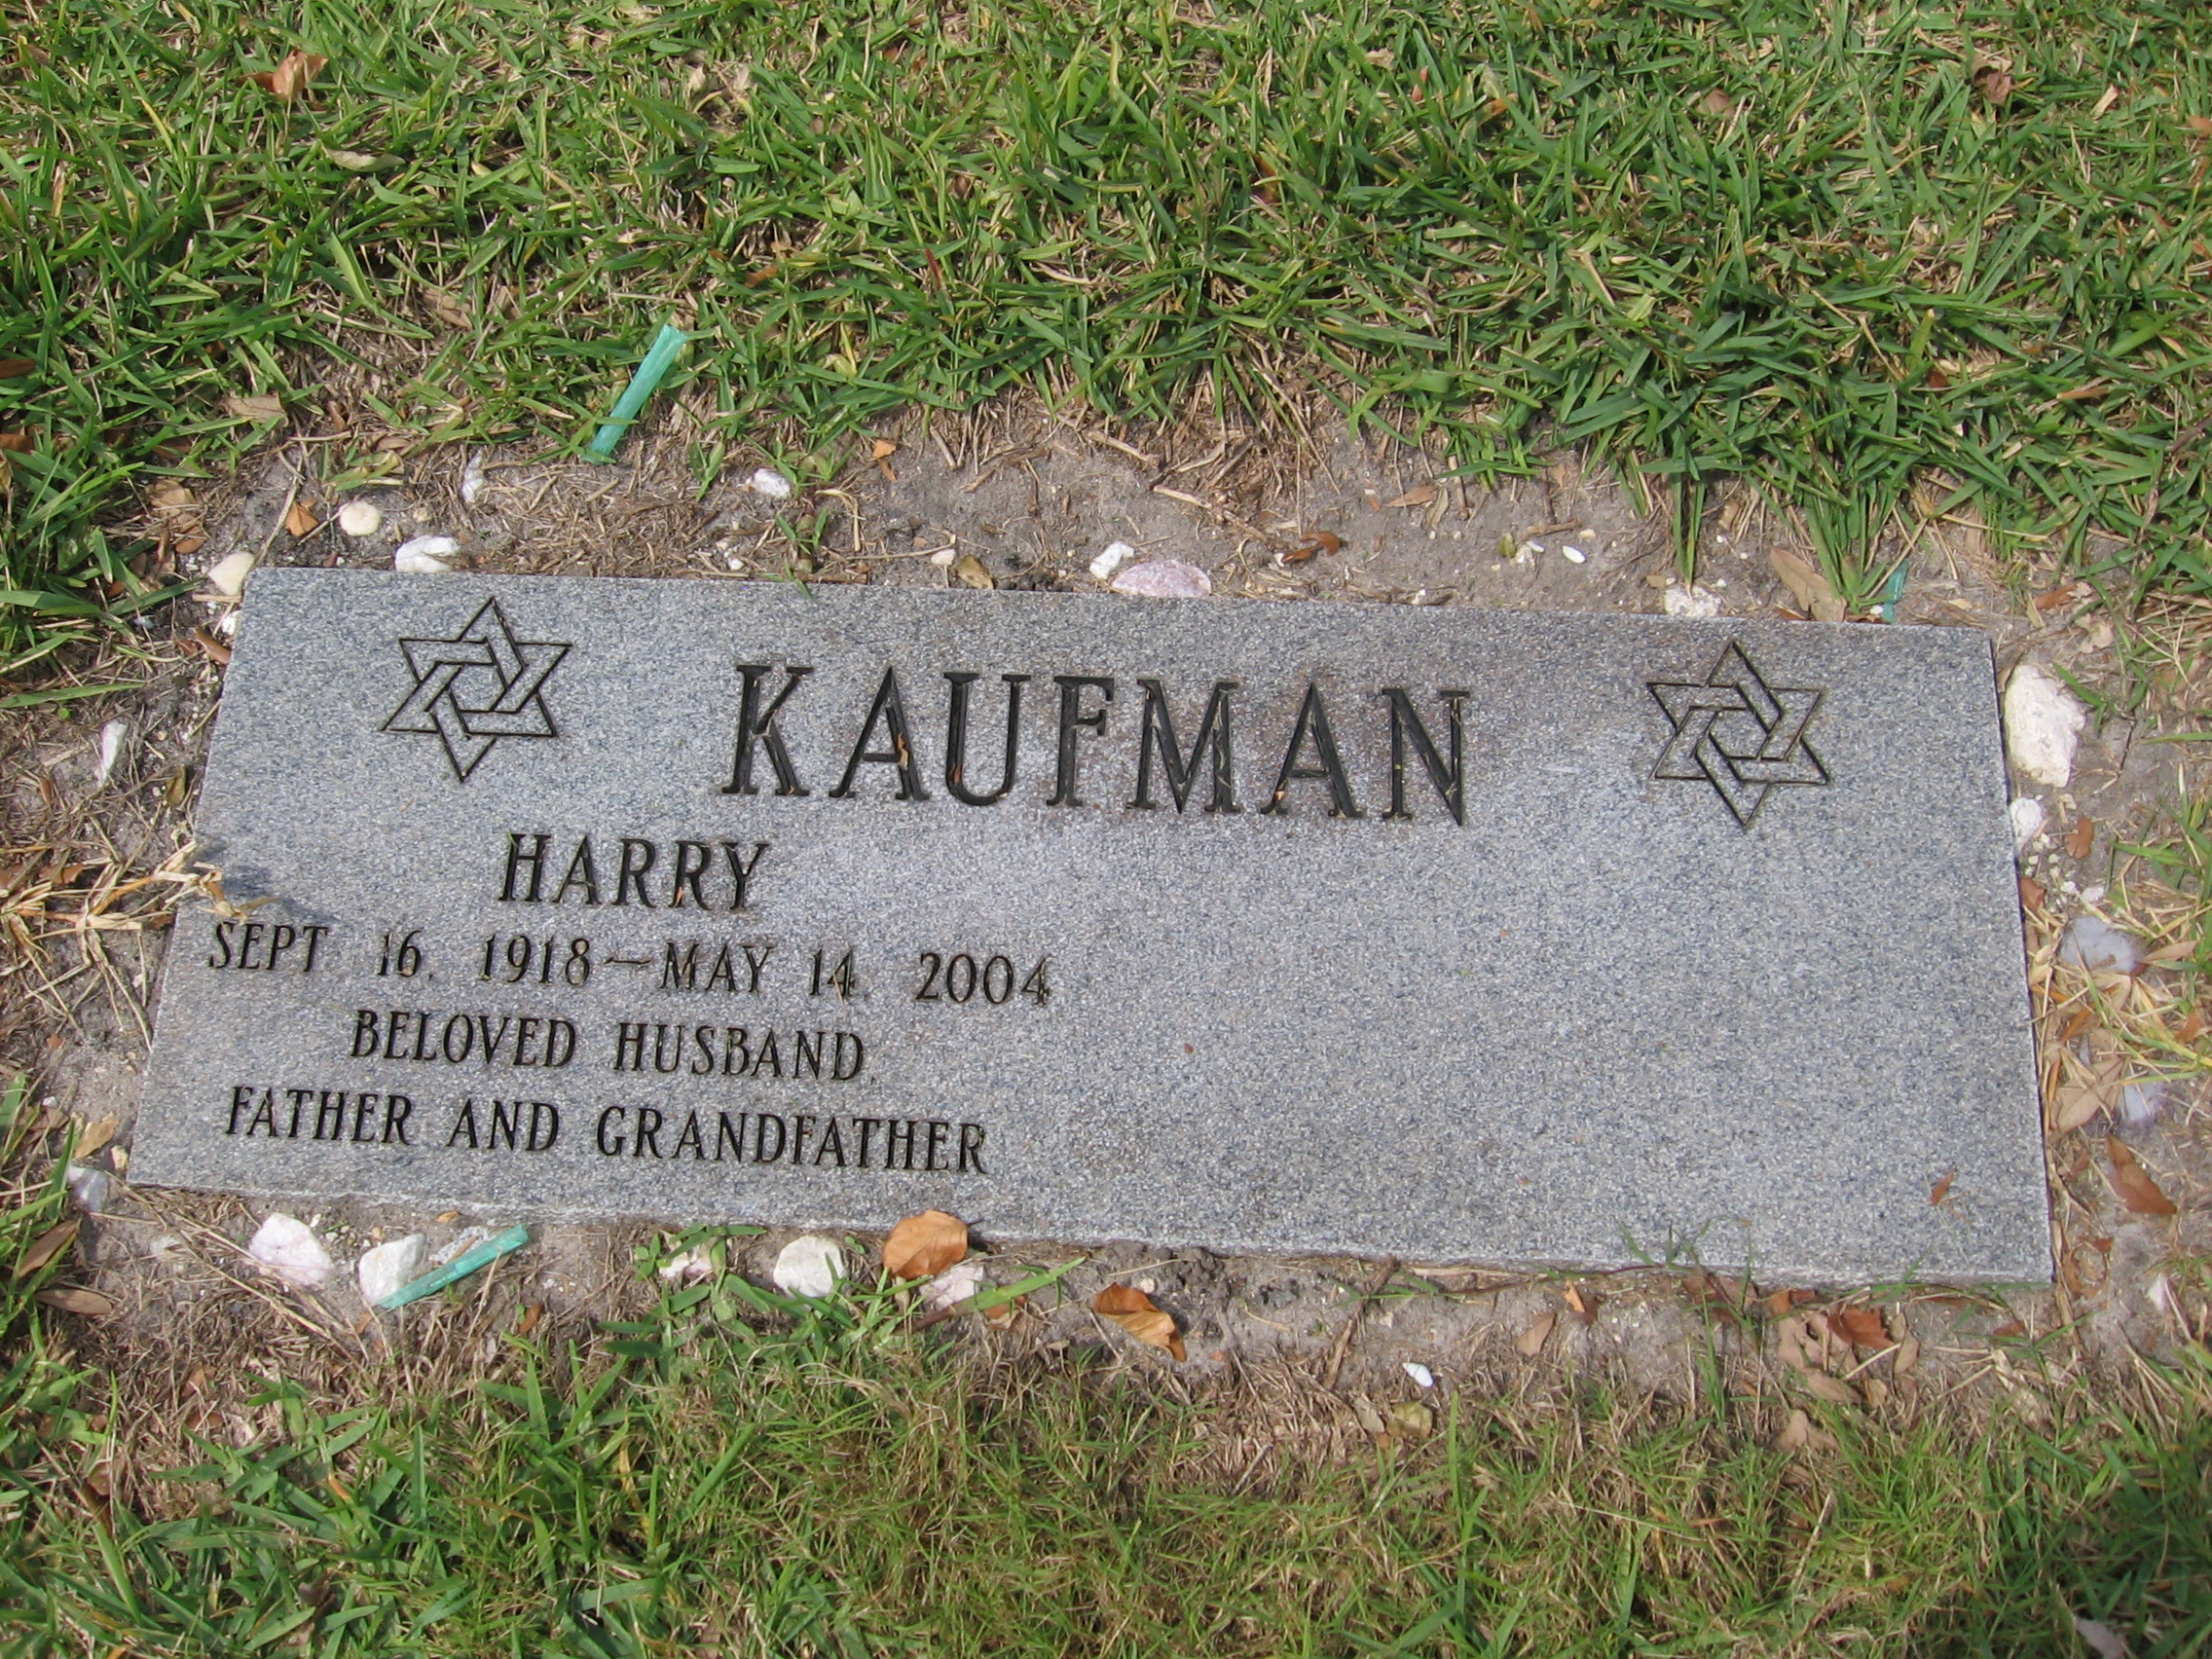 Harry Kaufman